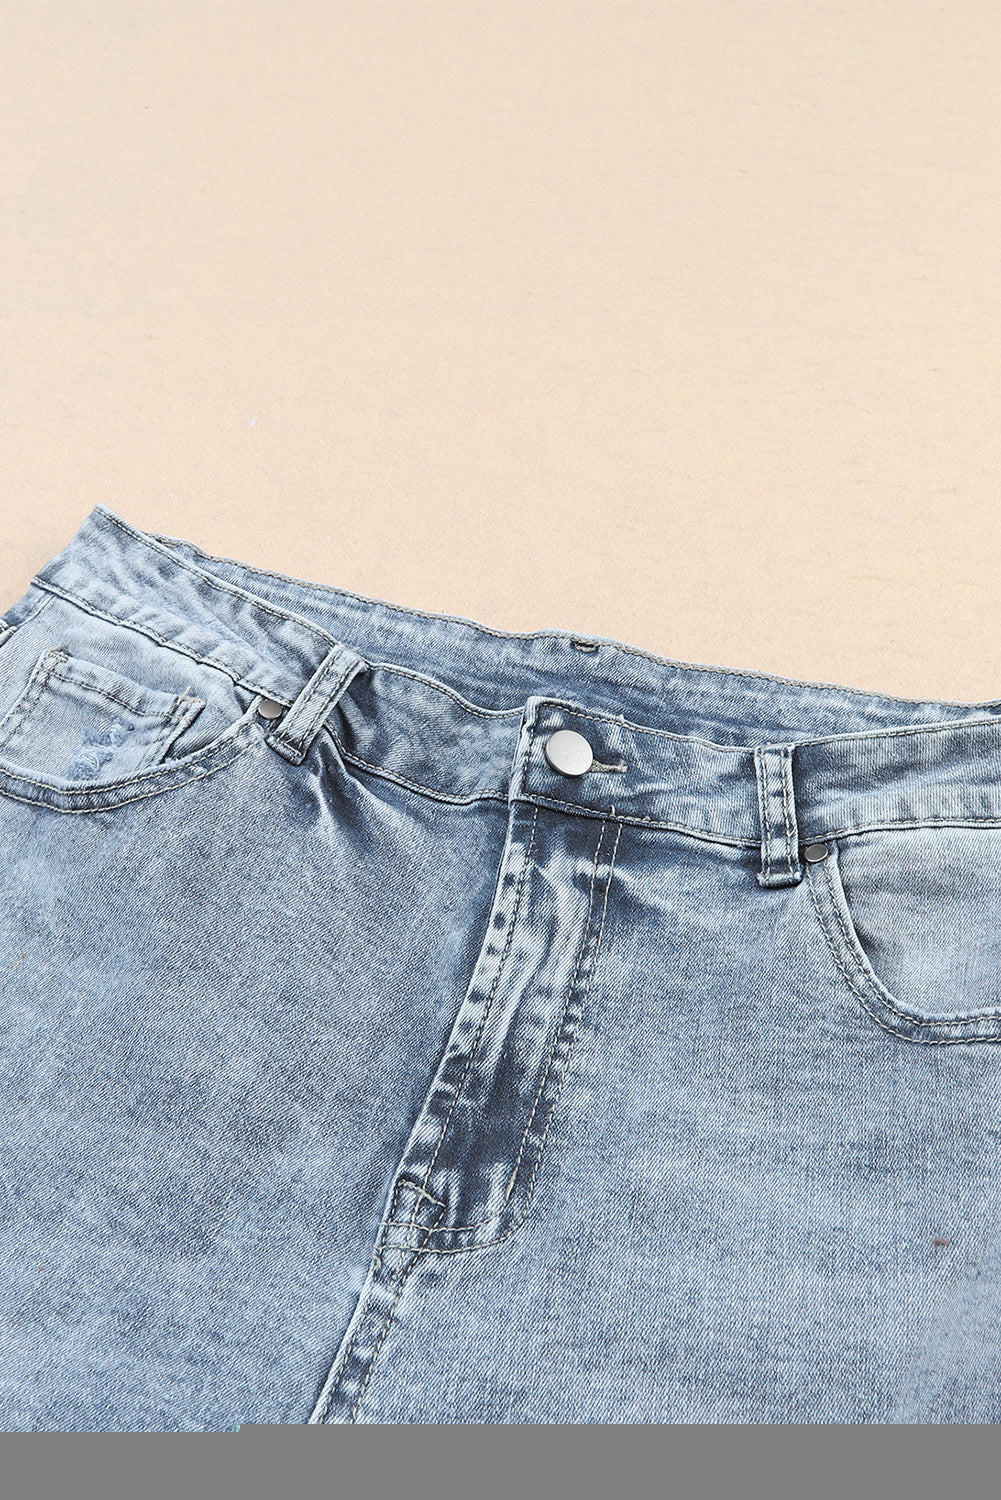 Sky Blue Light Wash Frayed Slim Fit High Waist Jeans - SELFTRITSS